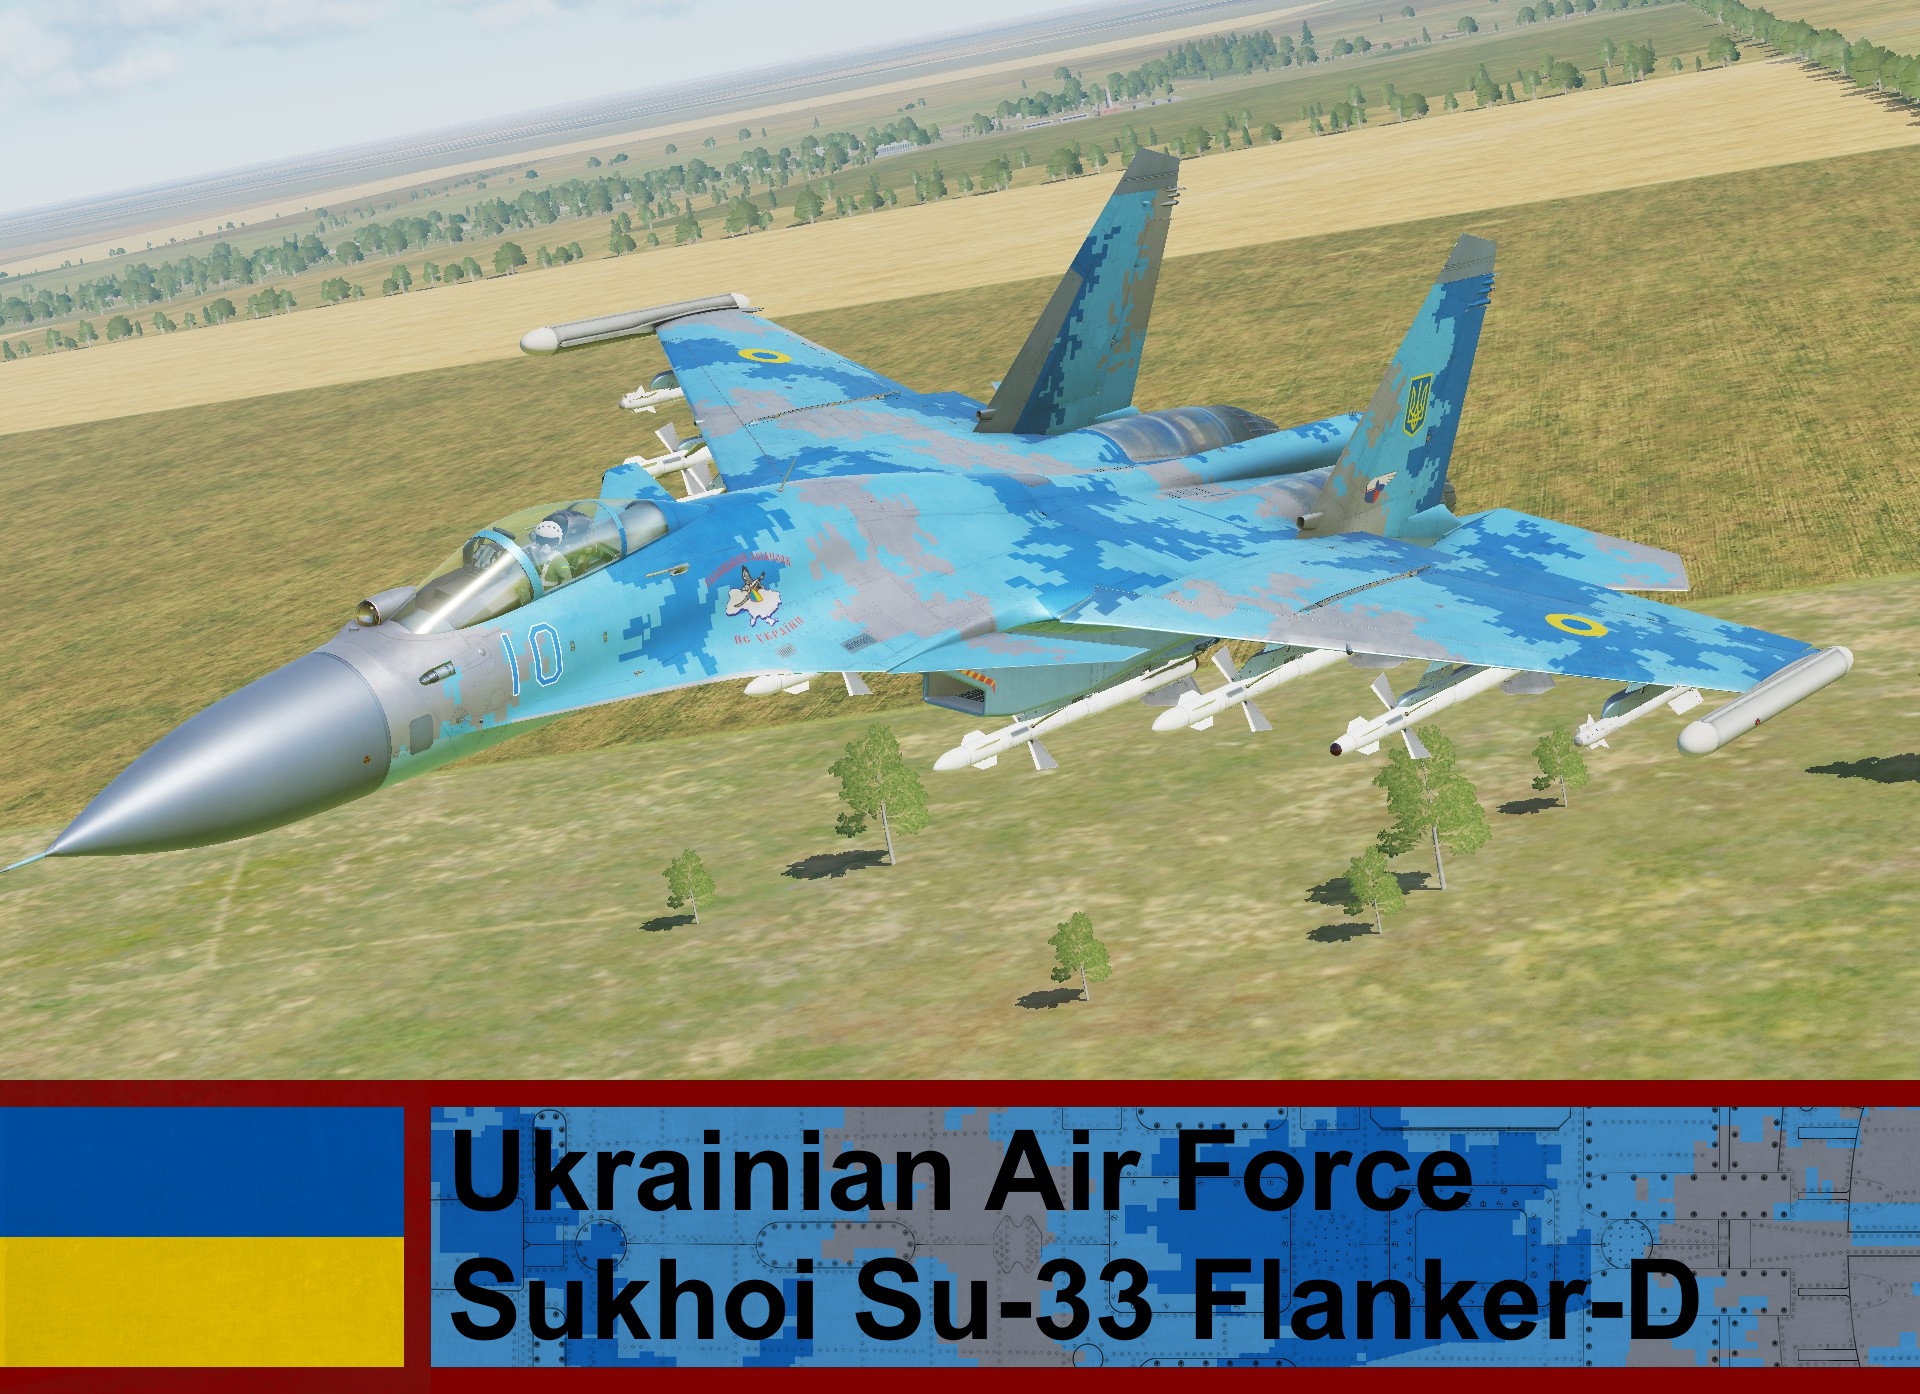 Ukrainian Air Force Su-33 Flanker-D (Fictional)